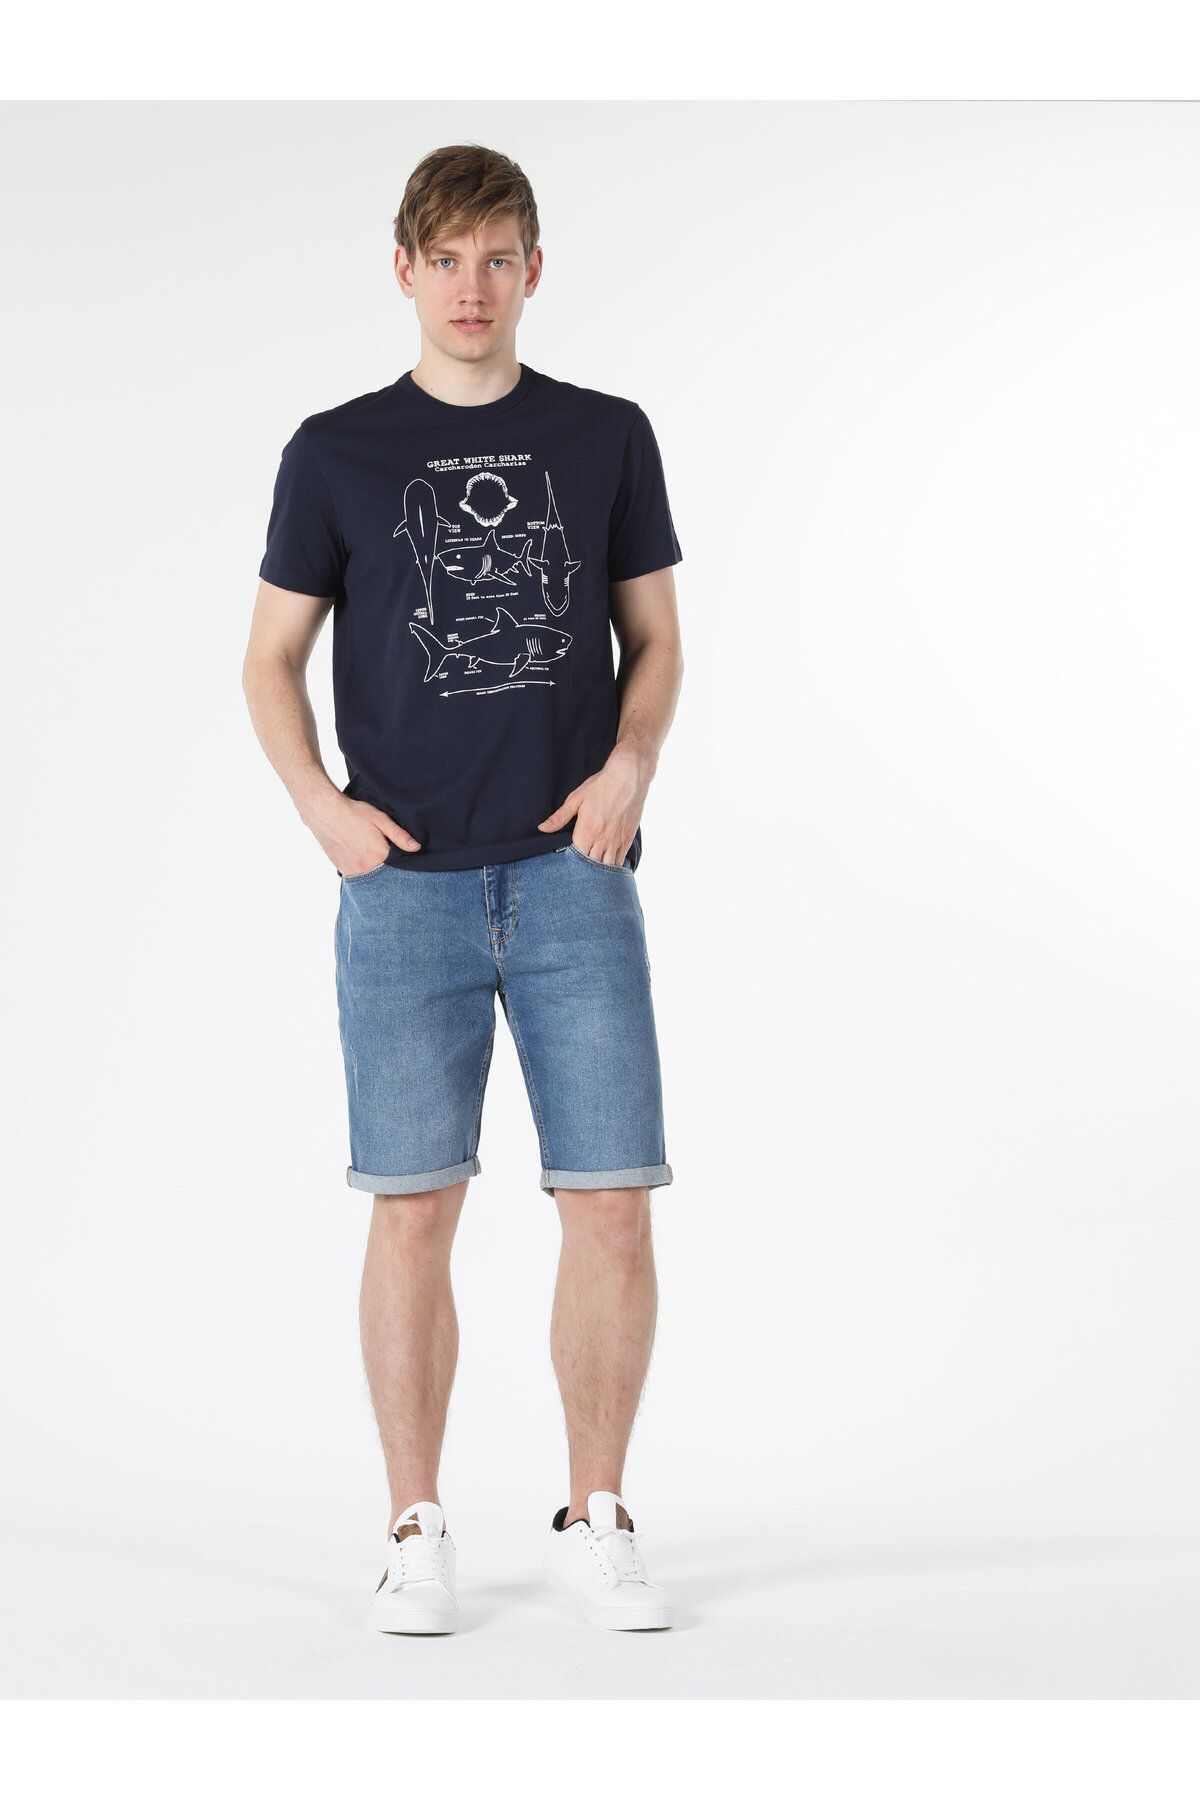 Colin’s یقه دوچرخه تناسب منظم چاپ شده Navy Blue Men's Men Shirt T